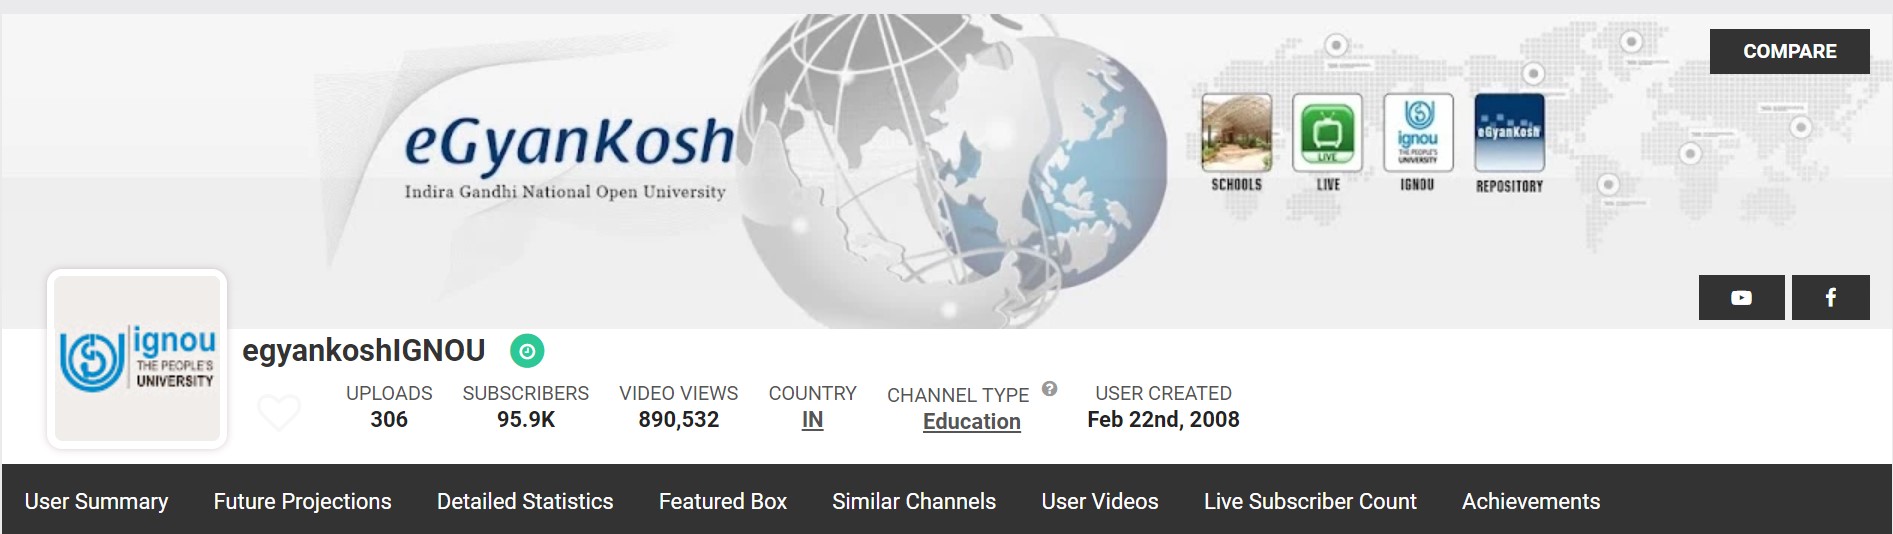 Egyankosh IGNOU YouTube channl for UPSC Aspirants